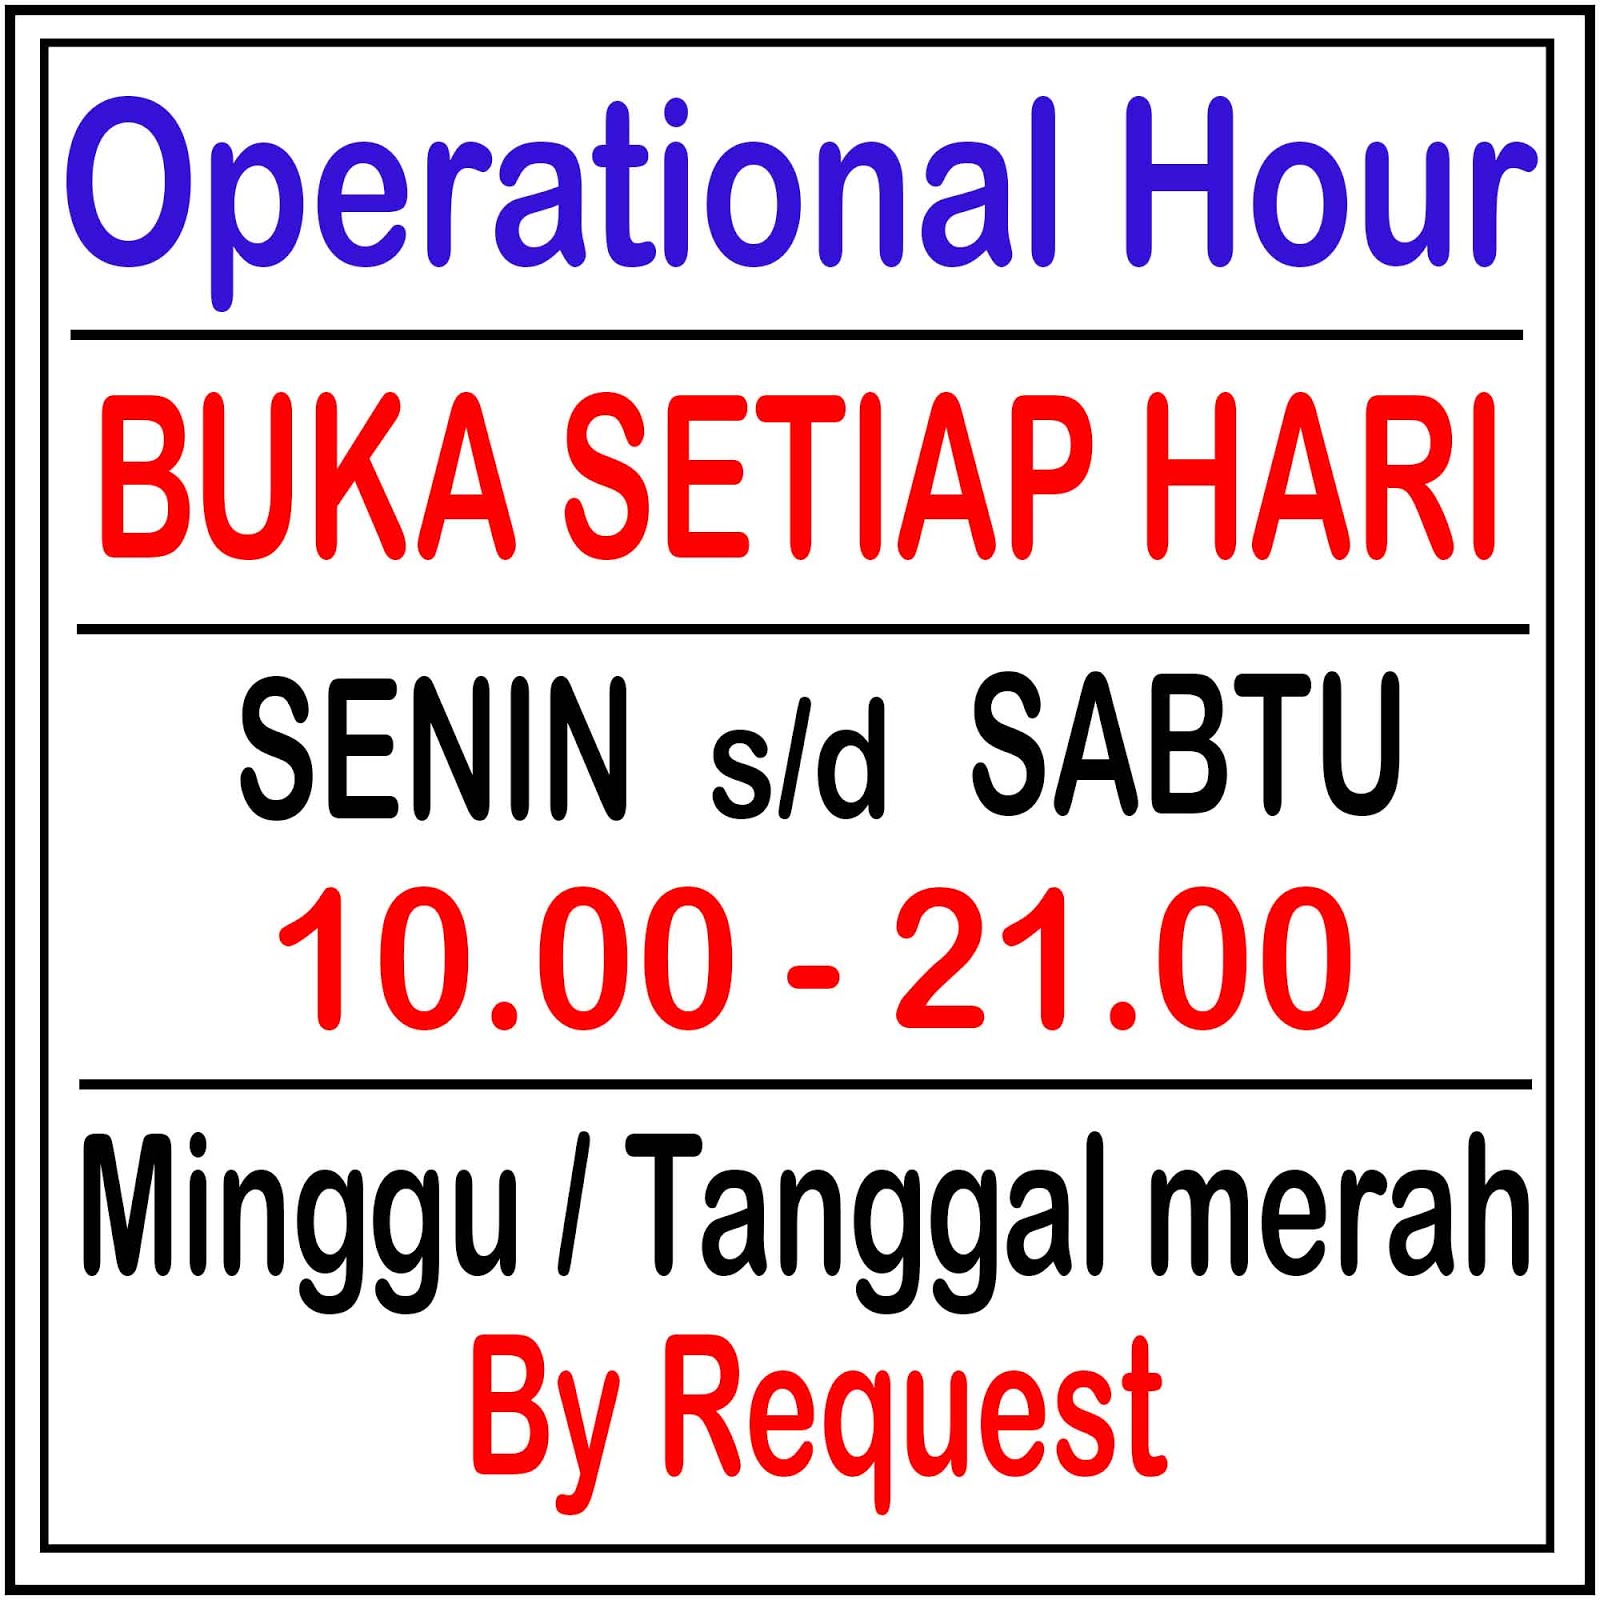 Operational hour